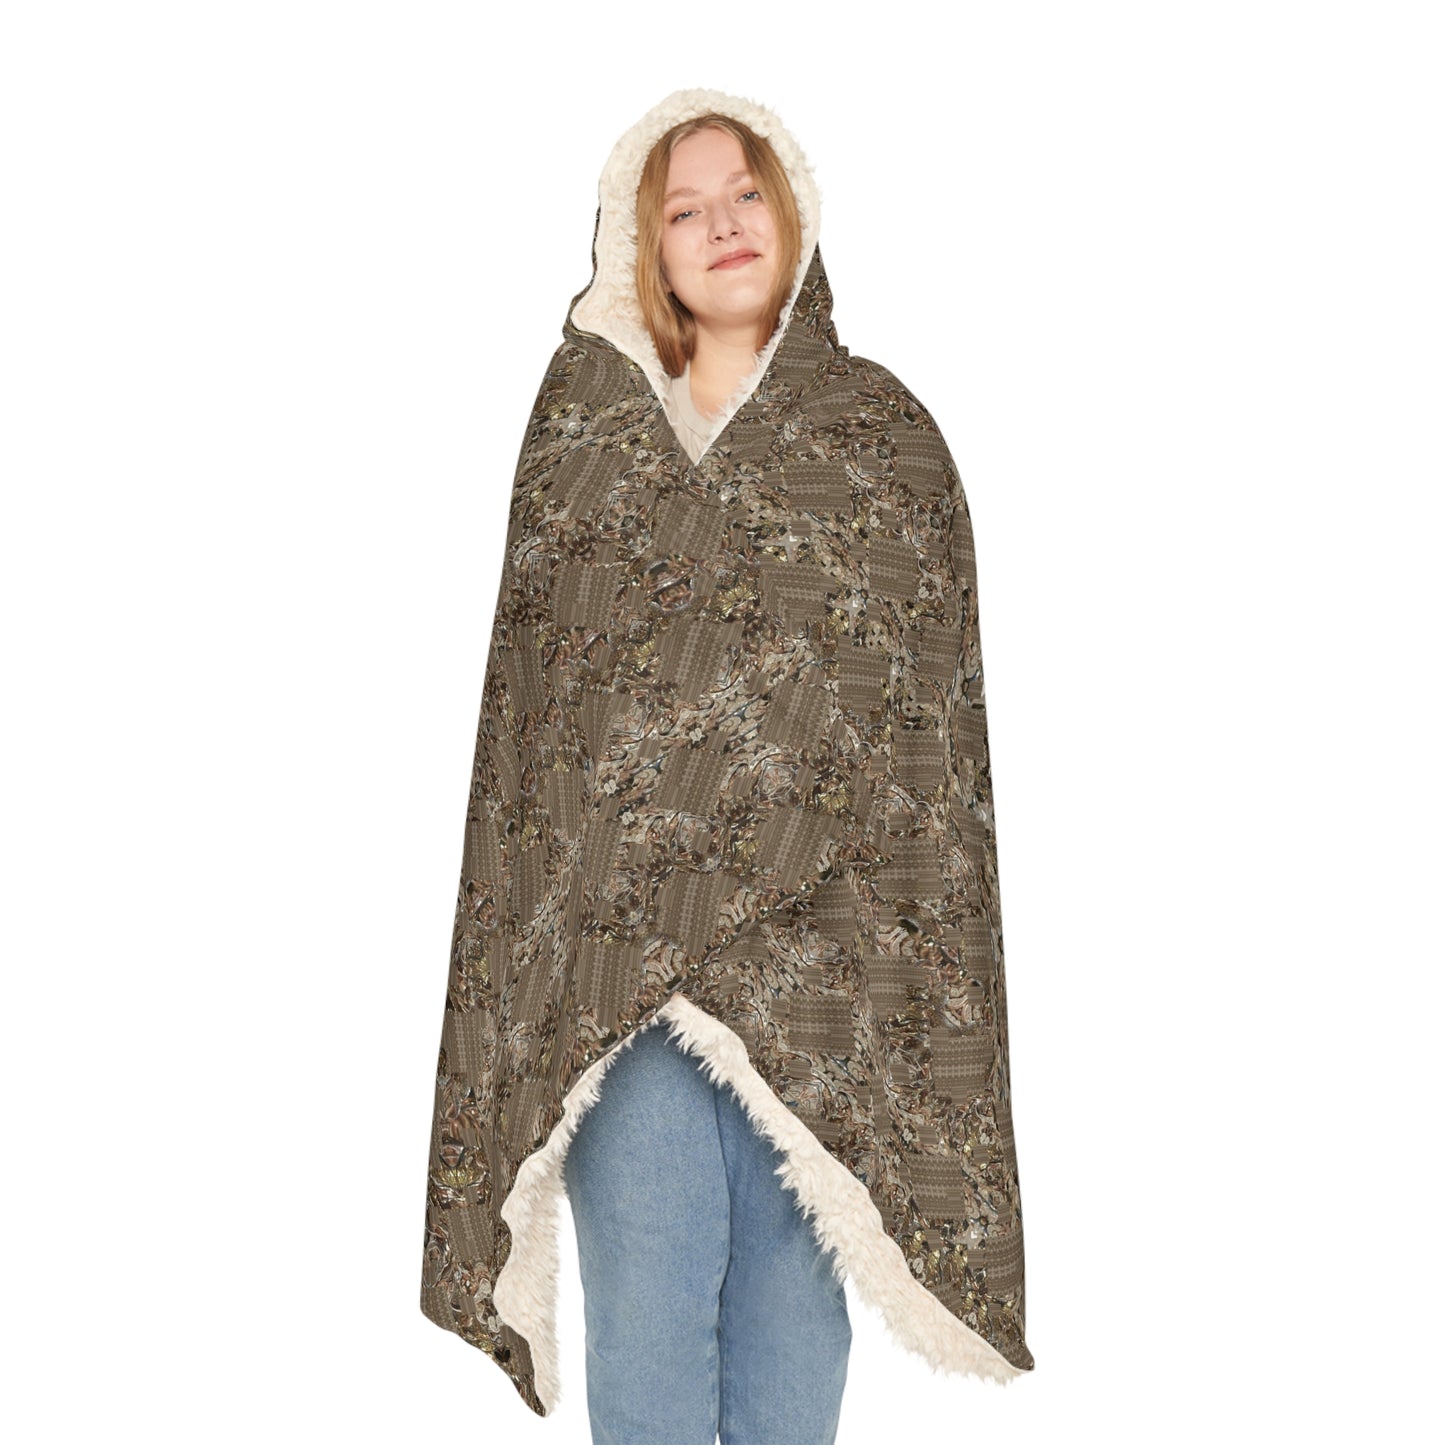 Hooded Snuggle Blanket (Samhain Dream Thaw 13/15 (Tredecim ex quindecim) RJSTHw2023 RJS